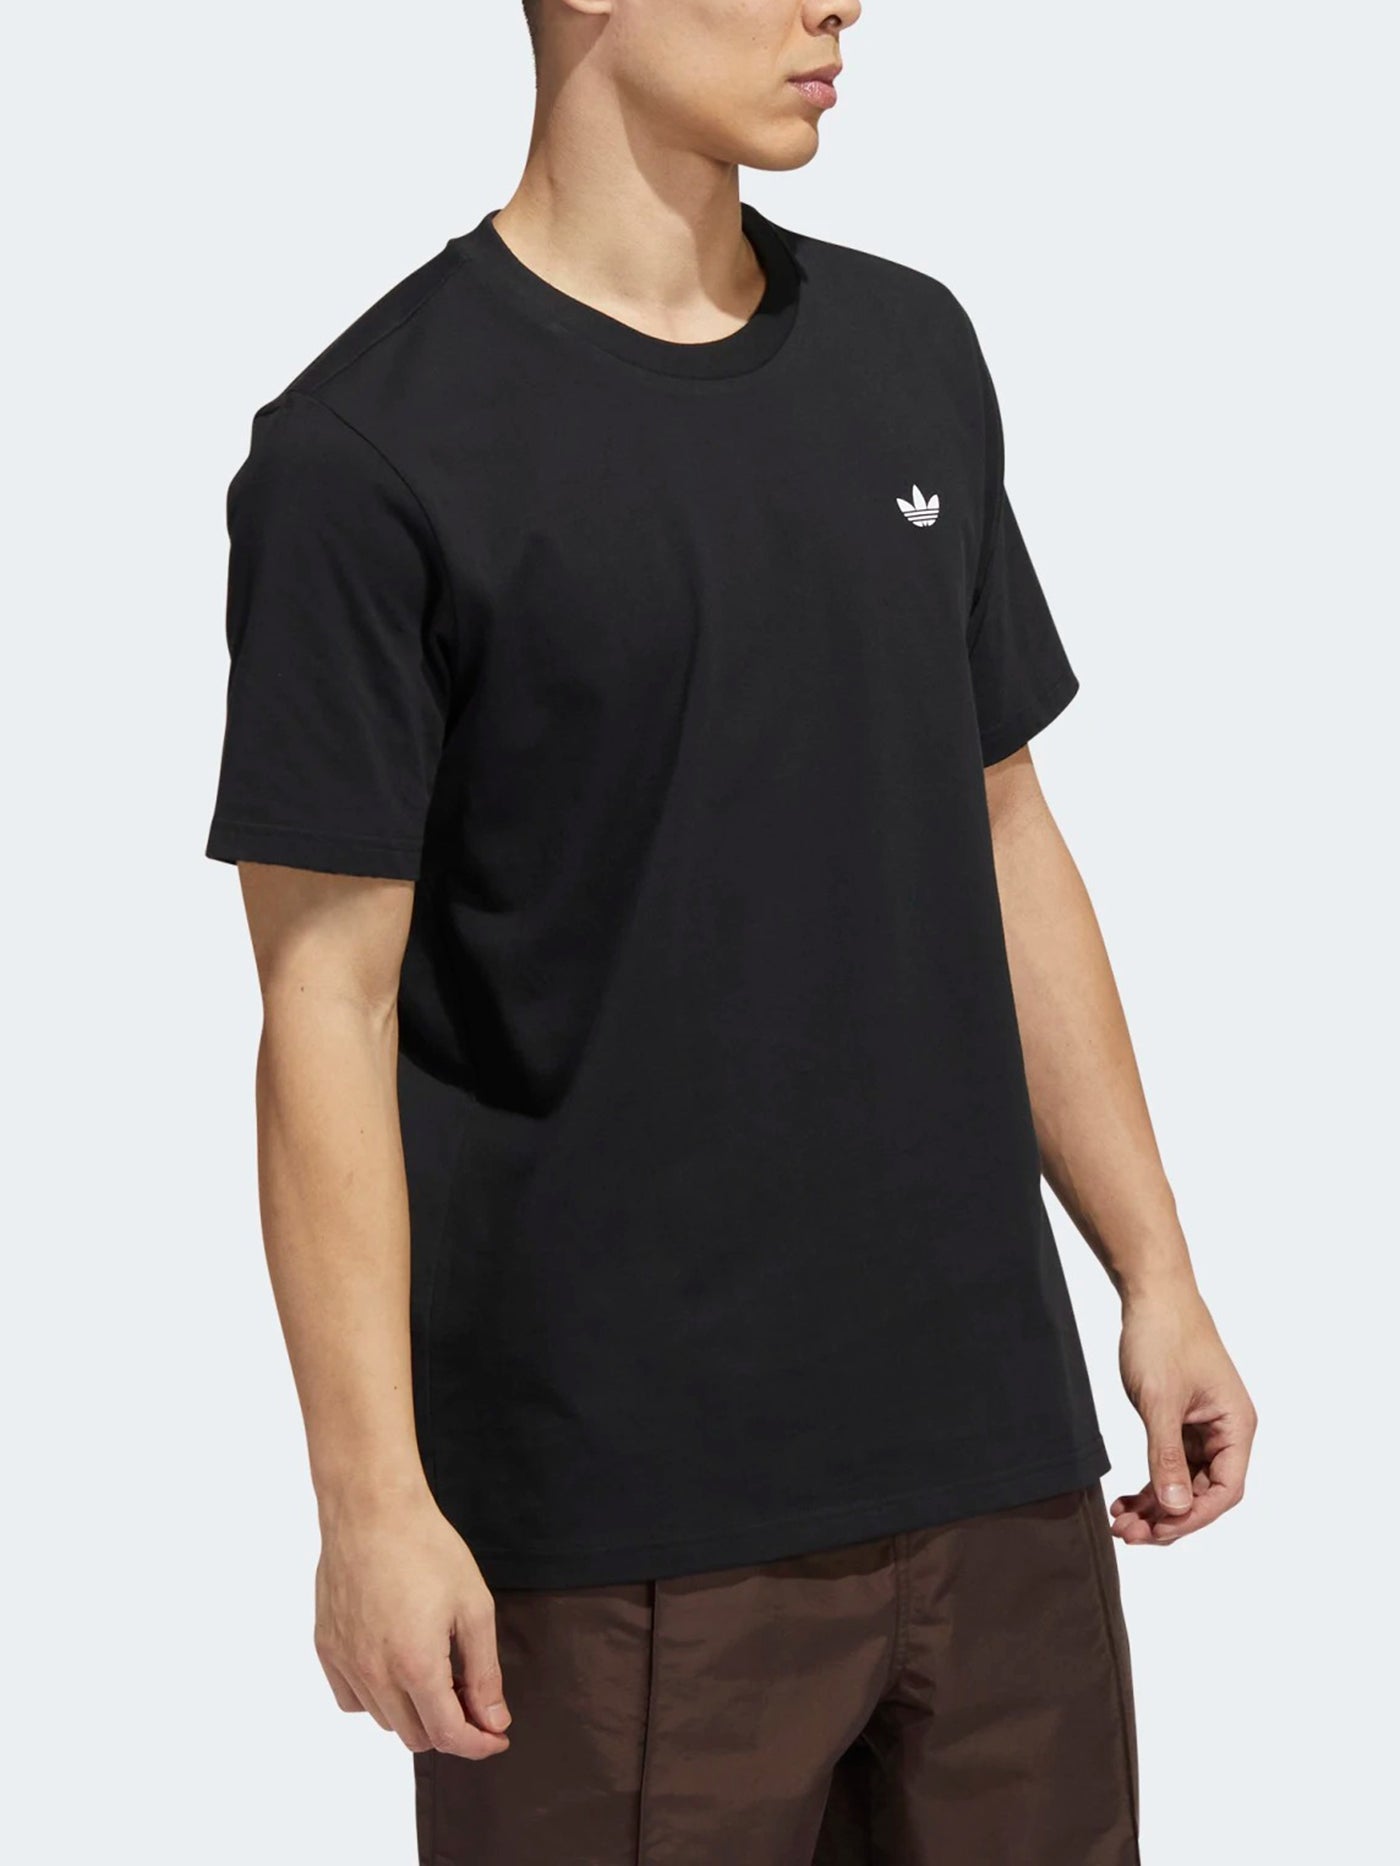 Adidas Spring 2023 4.0 Logo Black/White T-Shirt | EMPIRE